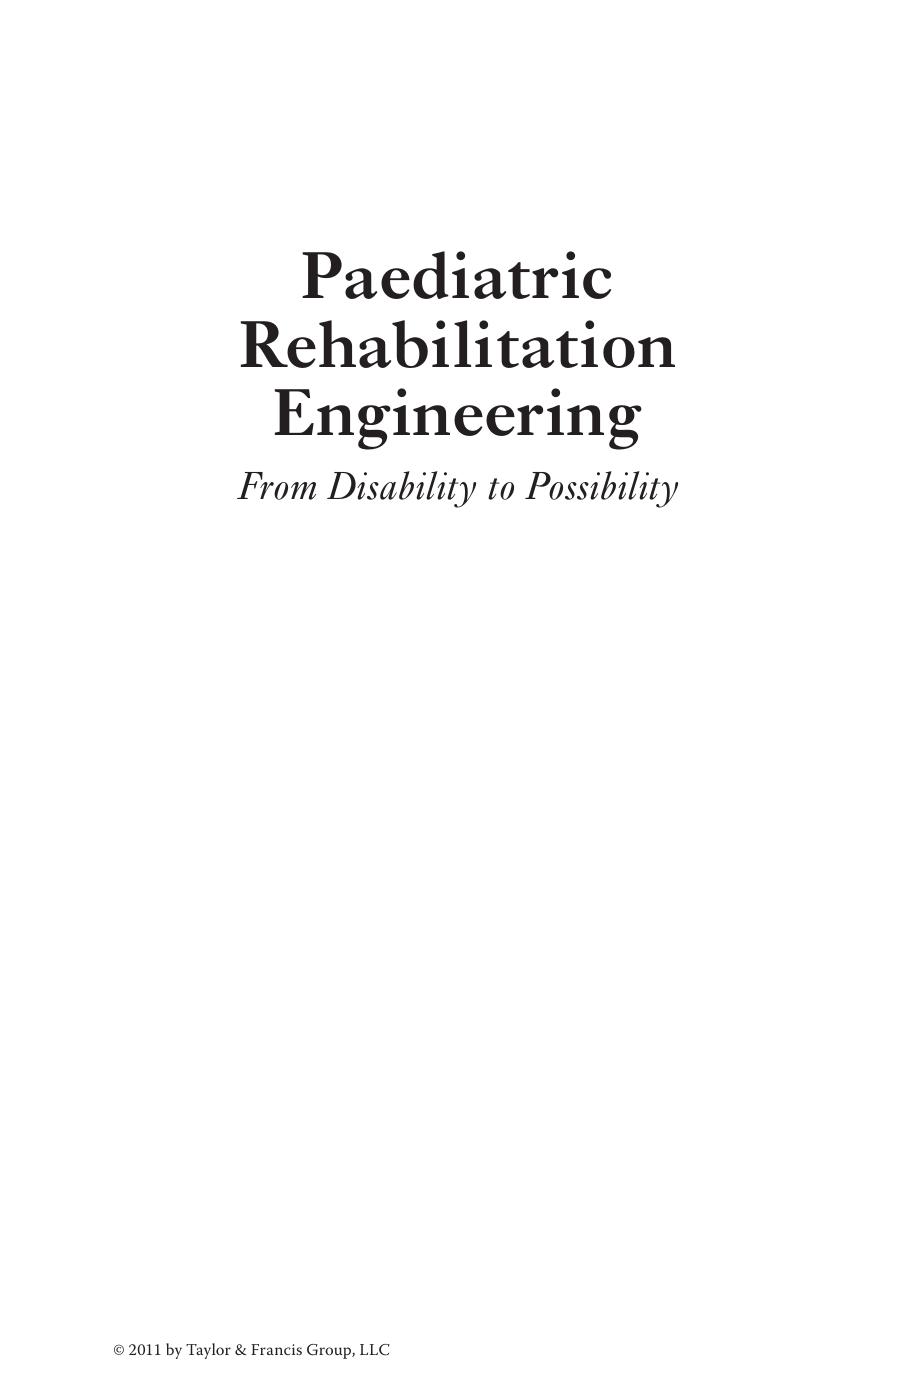 [Tom Chau, Jillian Fairley] Paediatric Rehabilitat(b-ok.org)